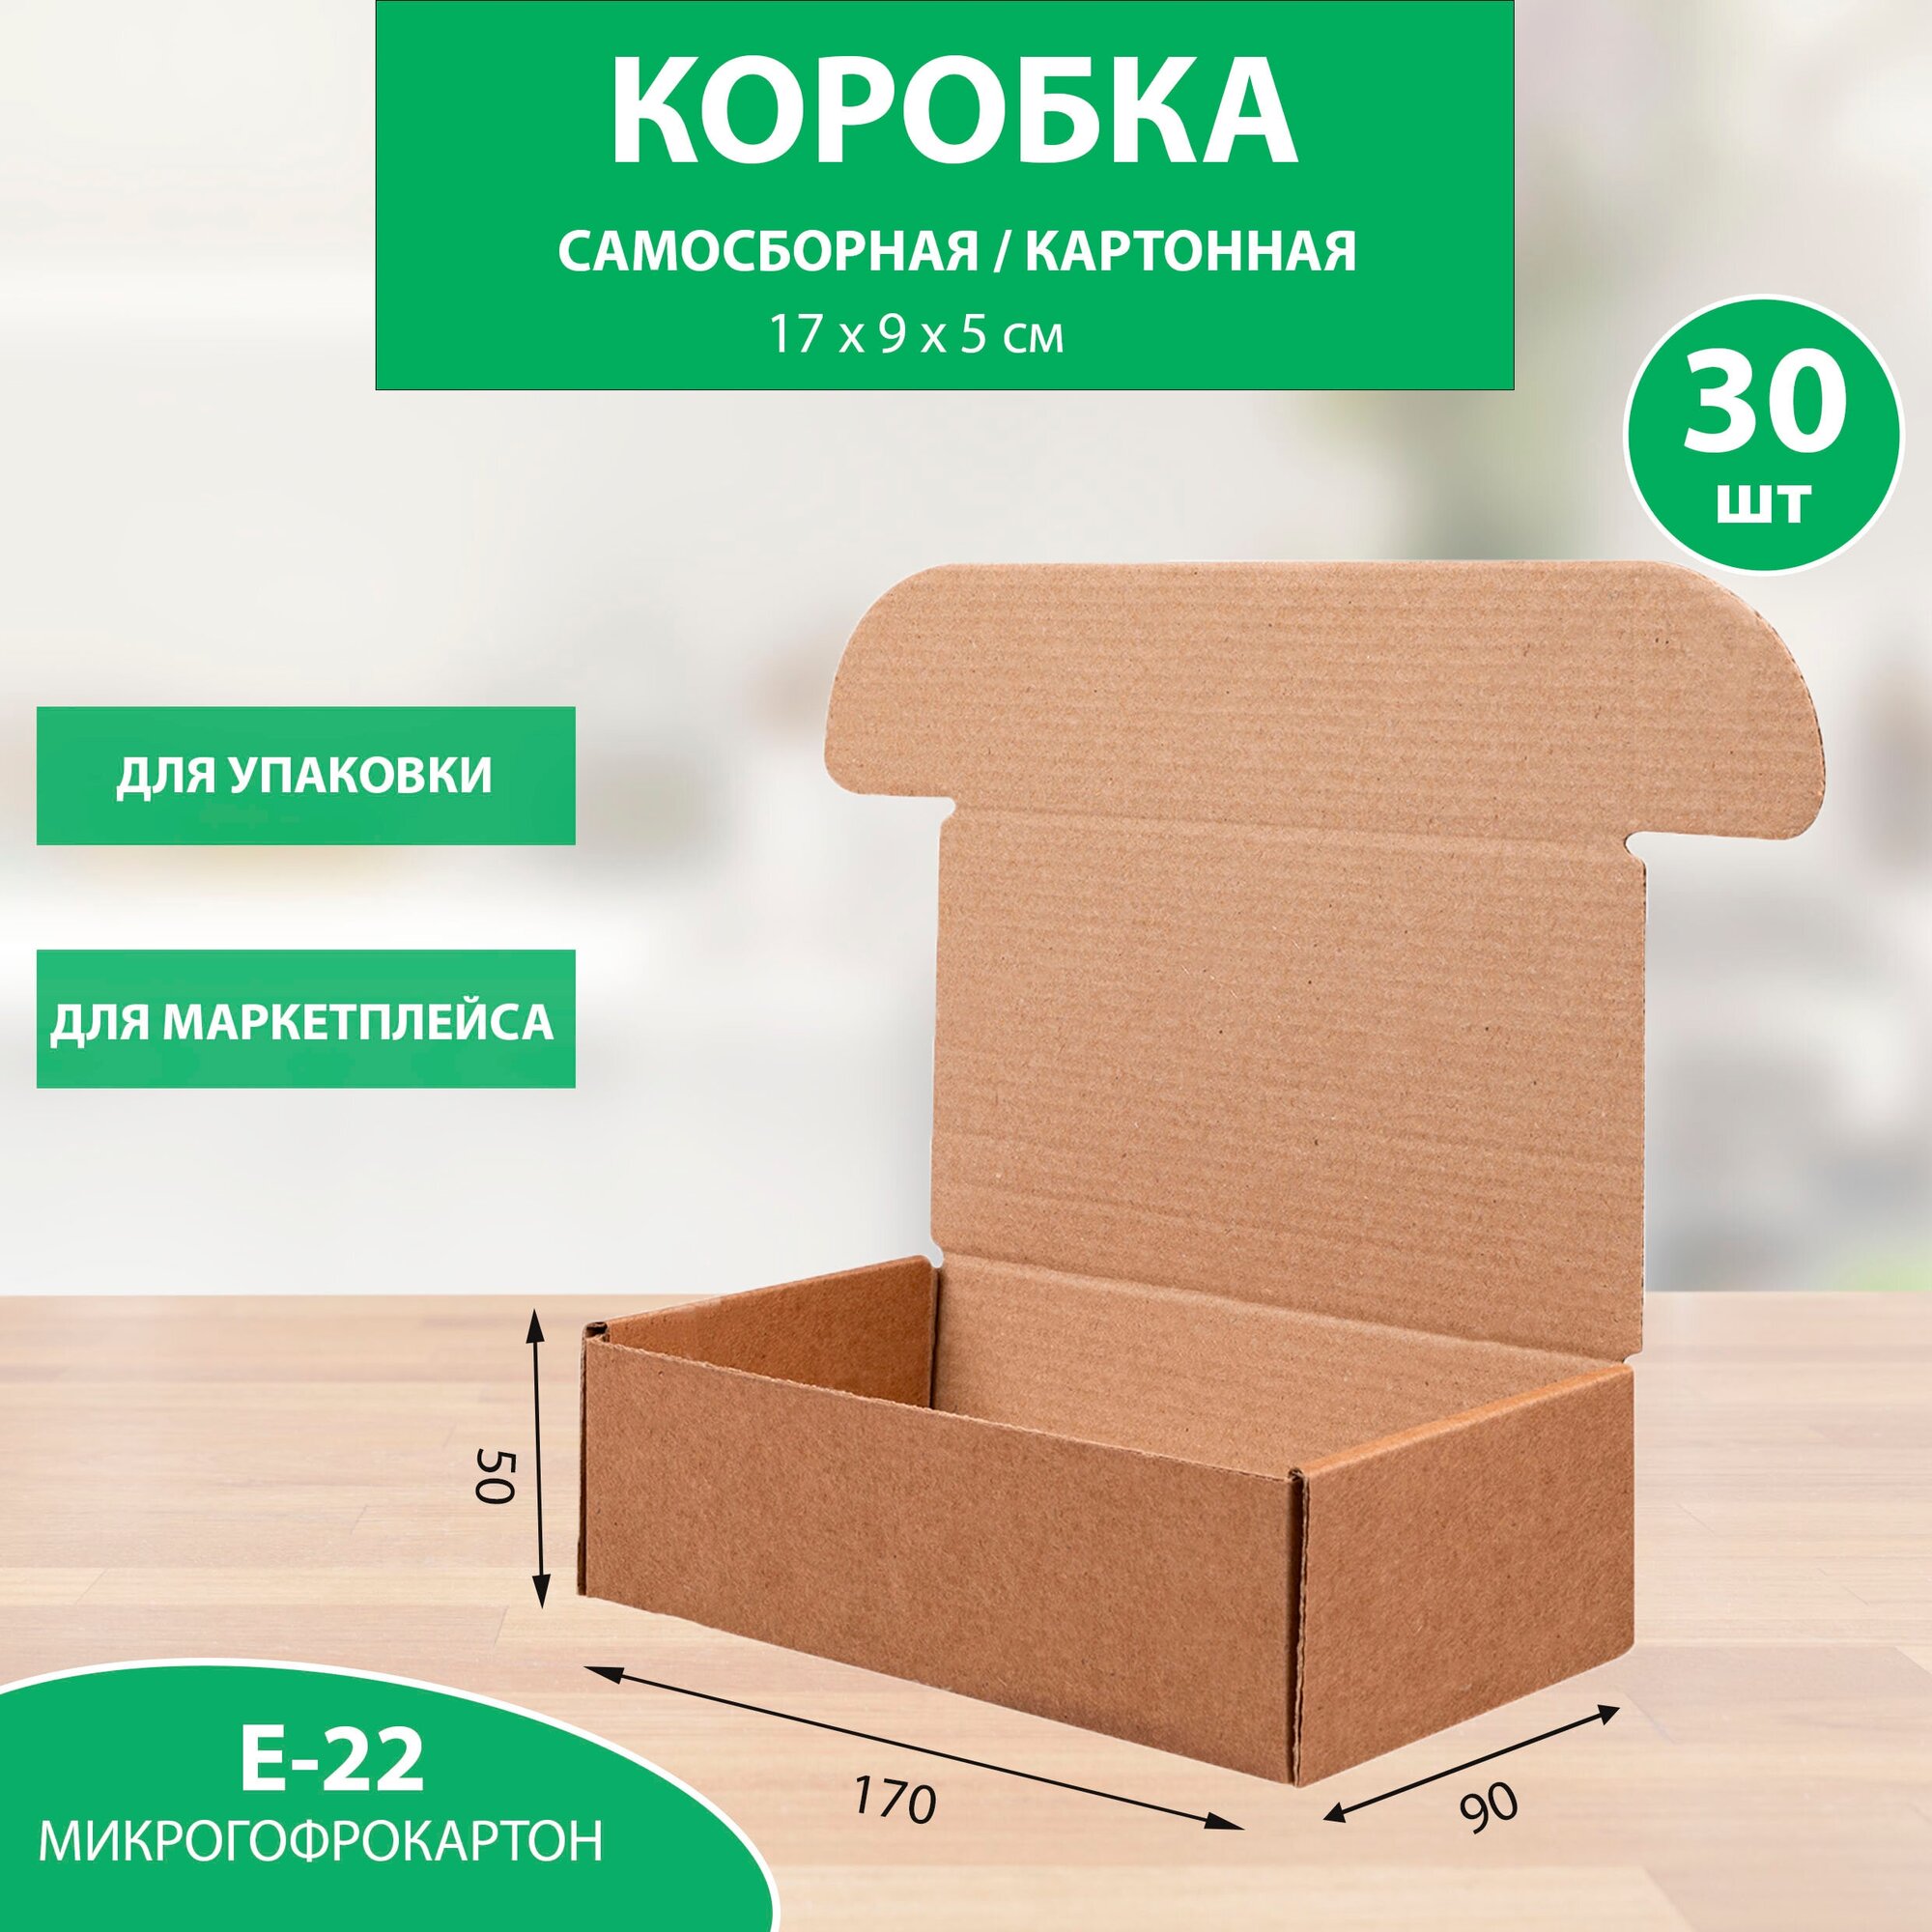 Коробка 170х90х50 мм. картонная для хранения №201 (премиум), Упаковка для маркетплейсов. 30 шт.